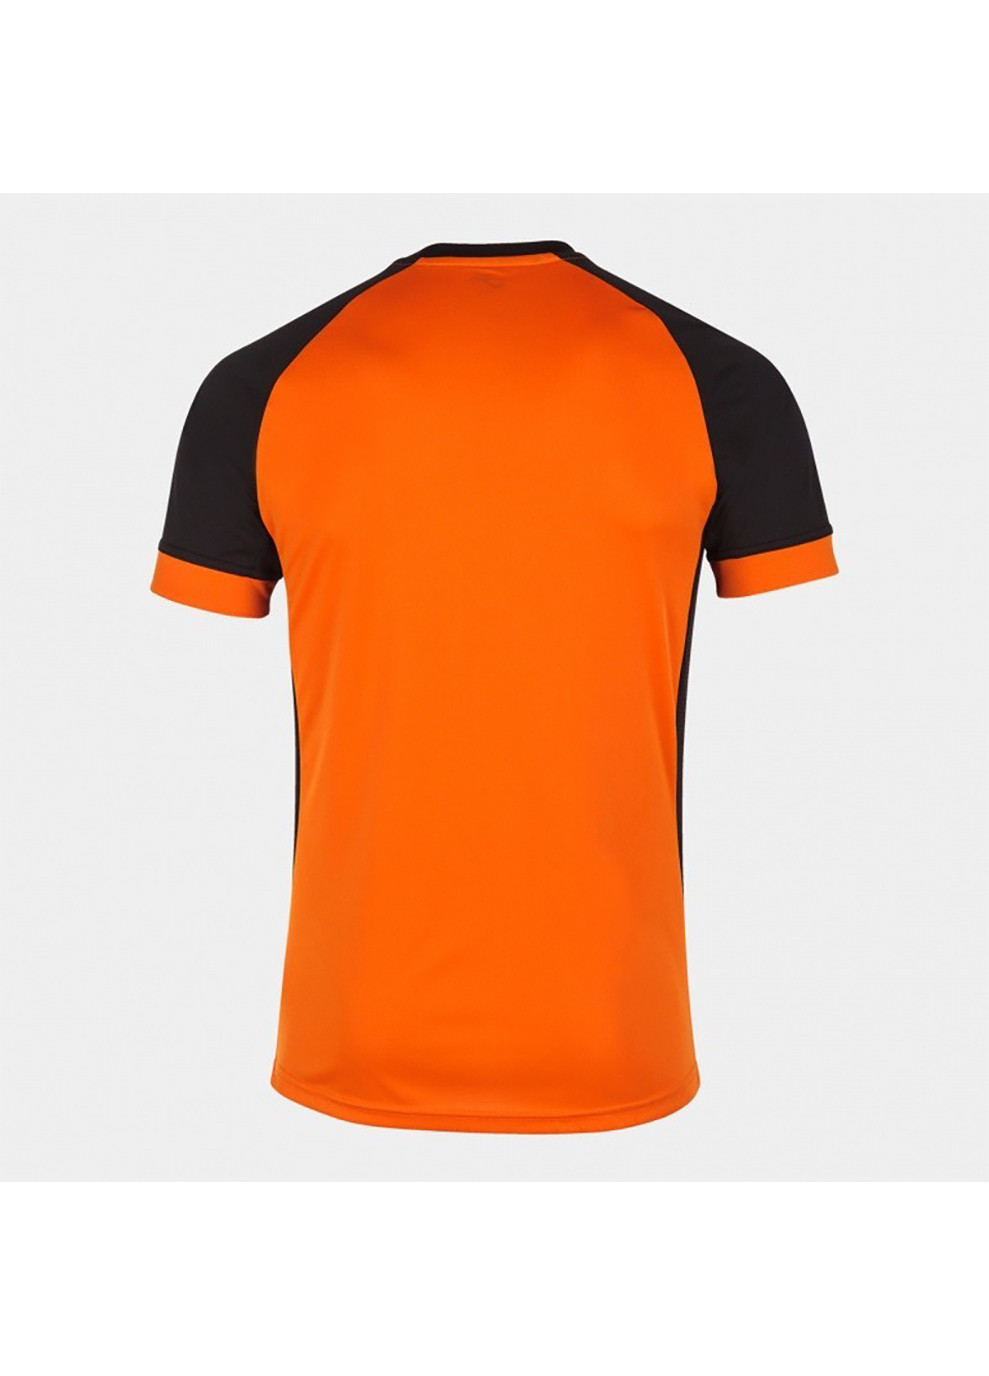 Оранжевая футболка supernova ii t-shirt orange-black s/s оранжевый Joma